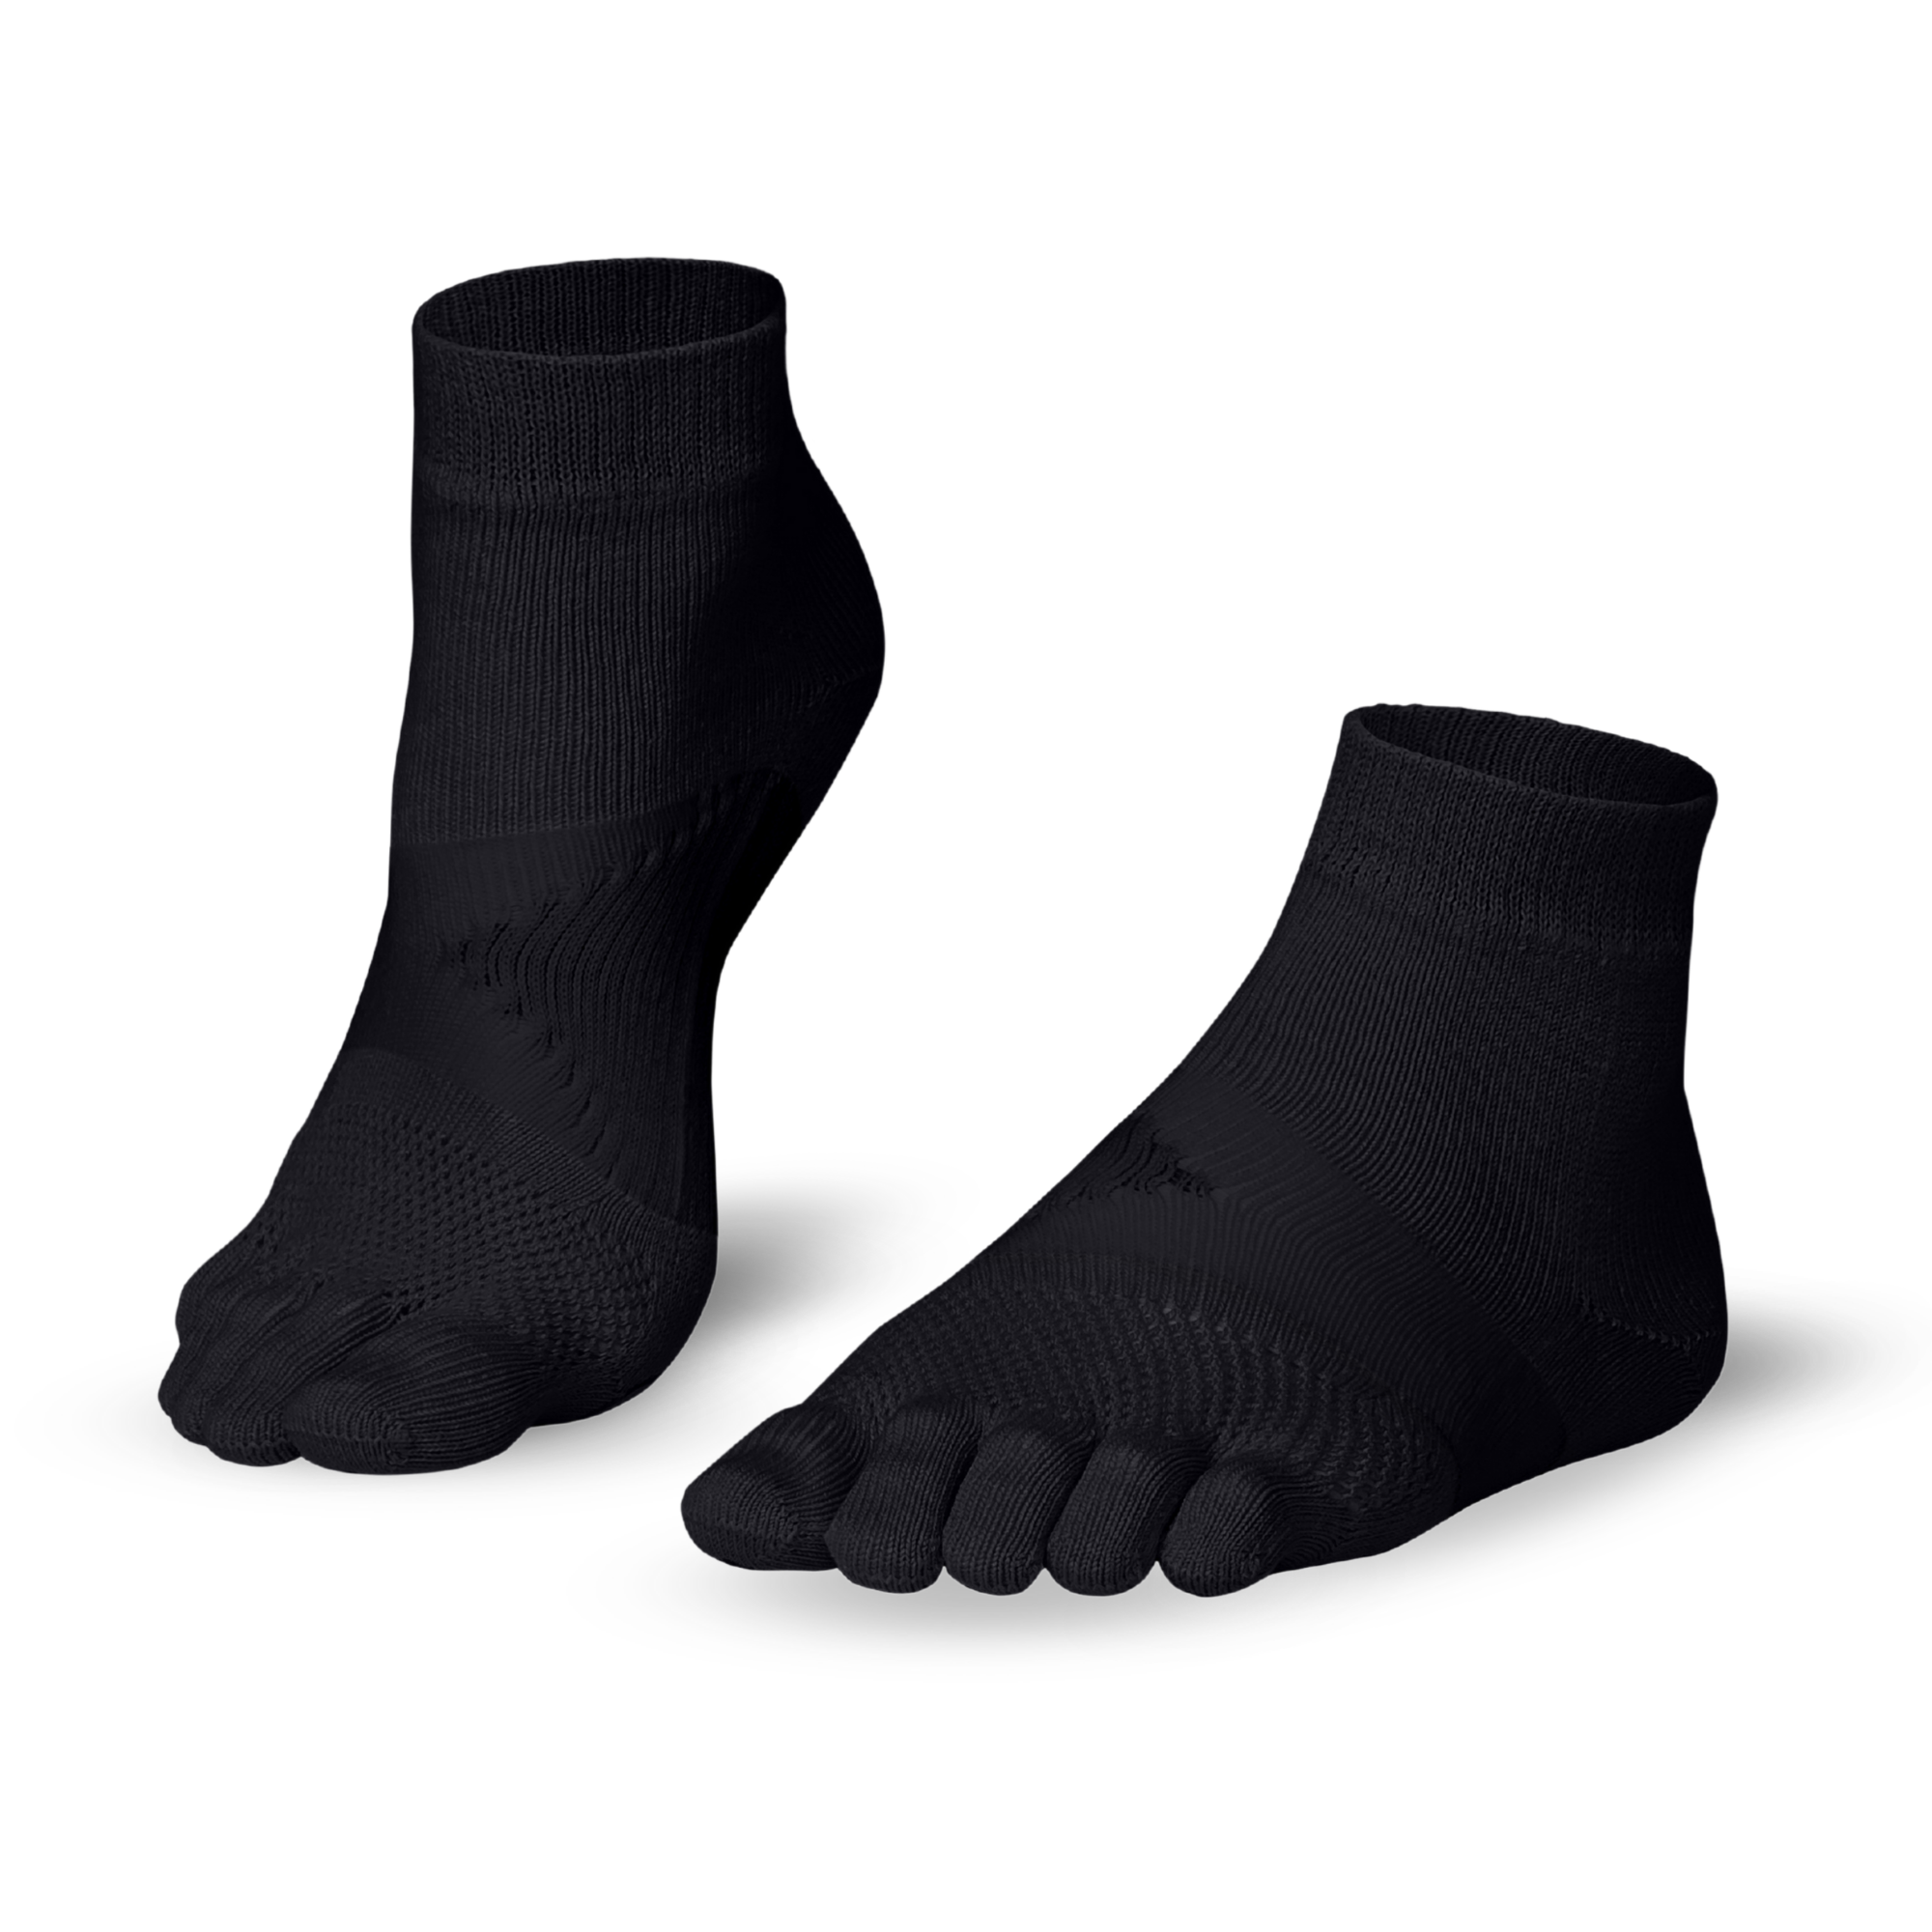 Running TS course à piedchaussettes à orteils - les essentiels de la course à piedchaussettes à orteils de Knitido : noir